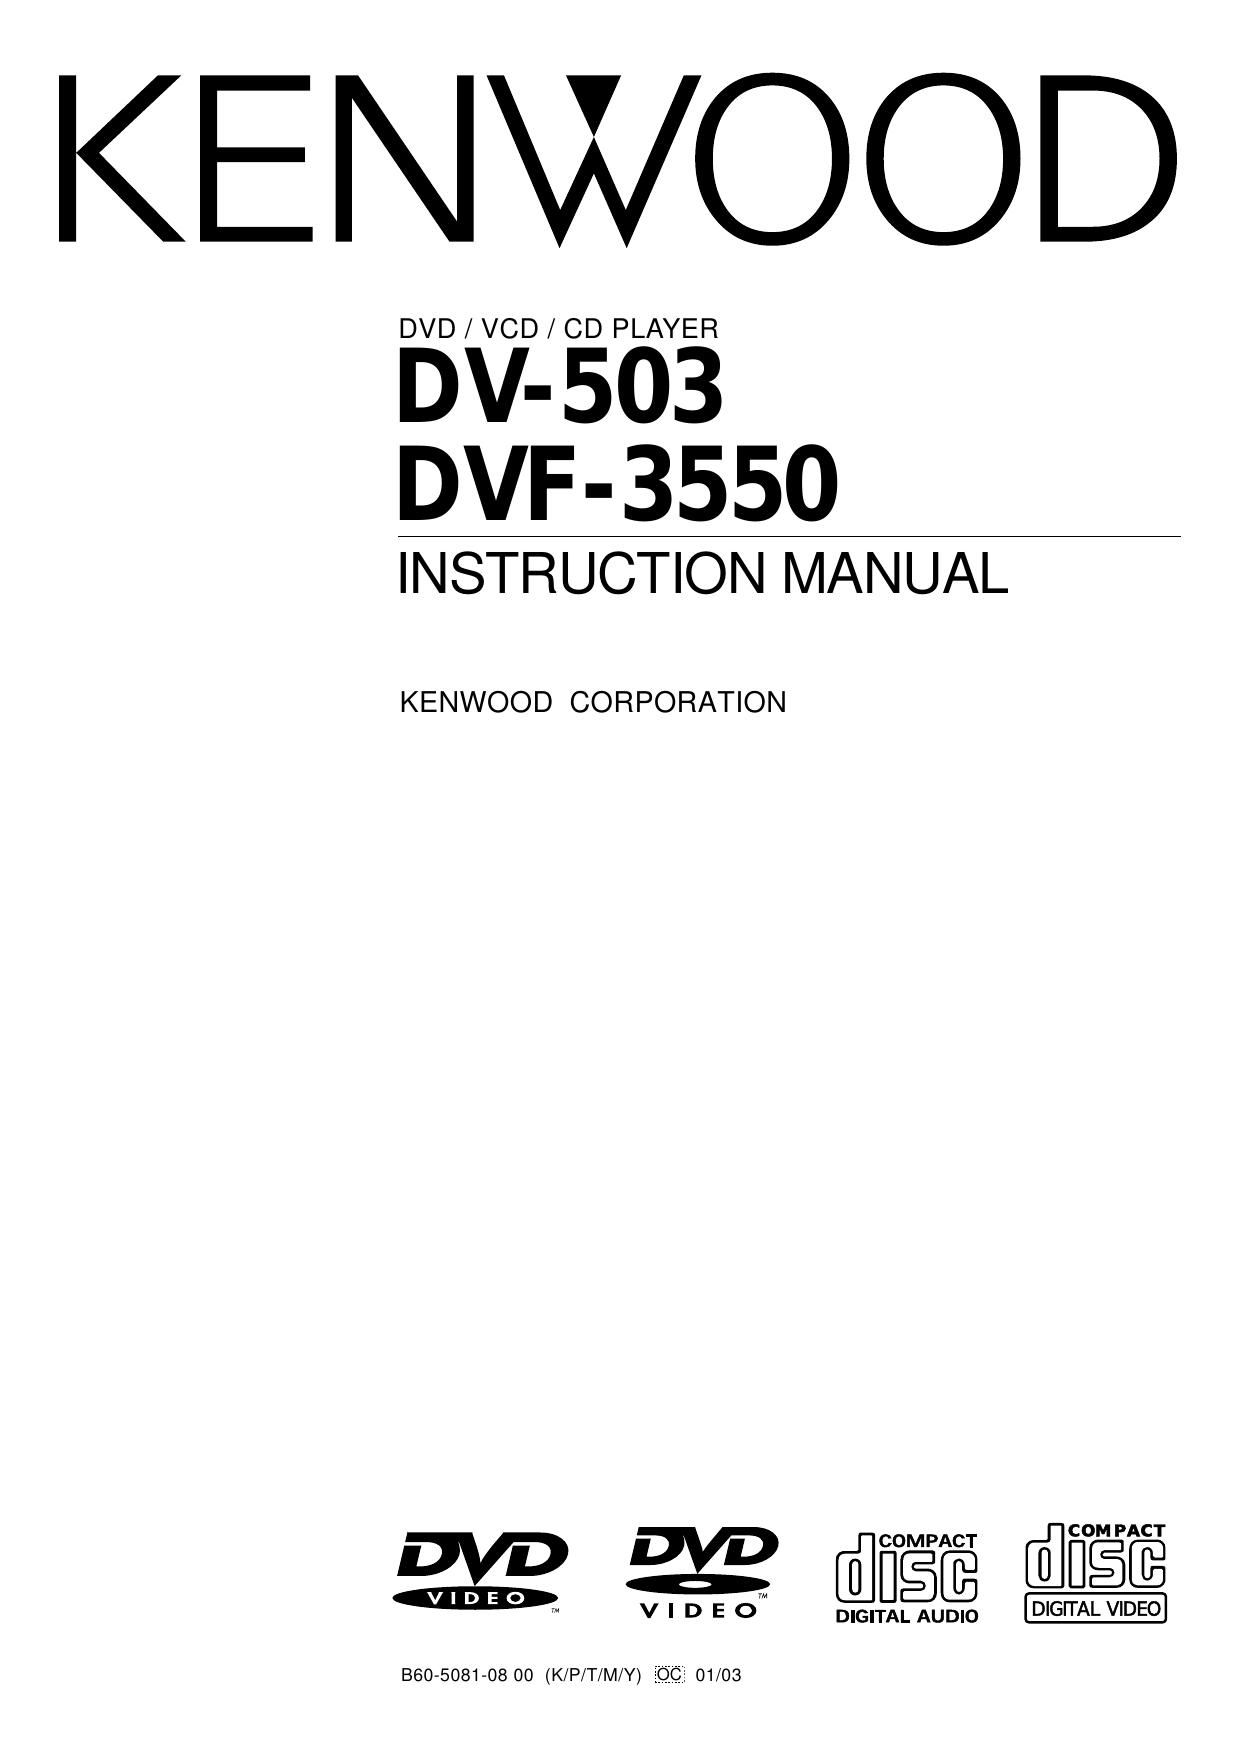 Kenwood DVF 3550 Owners Manual